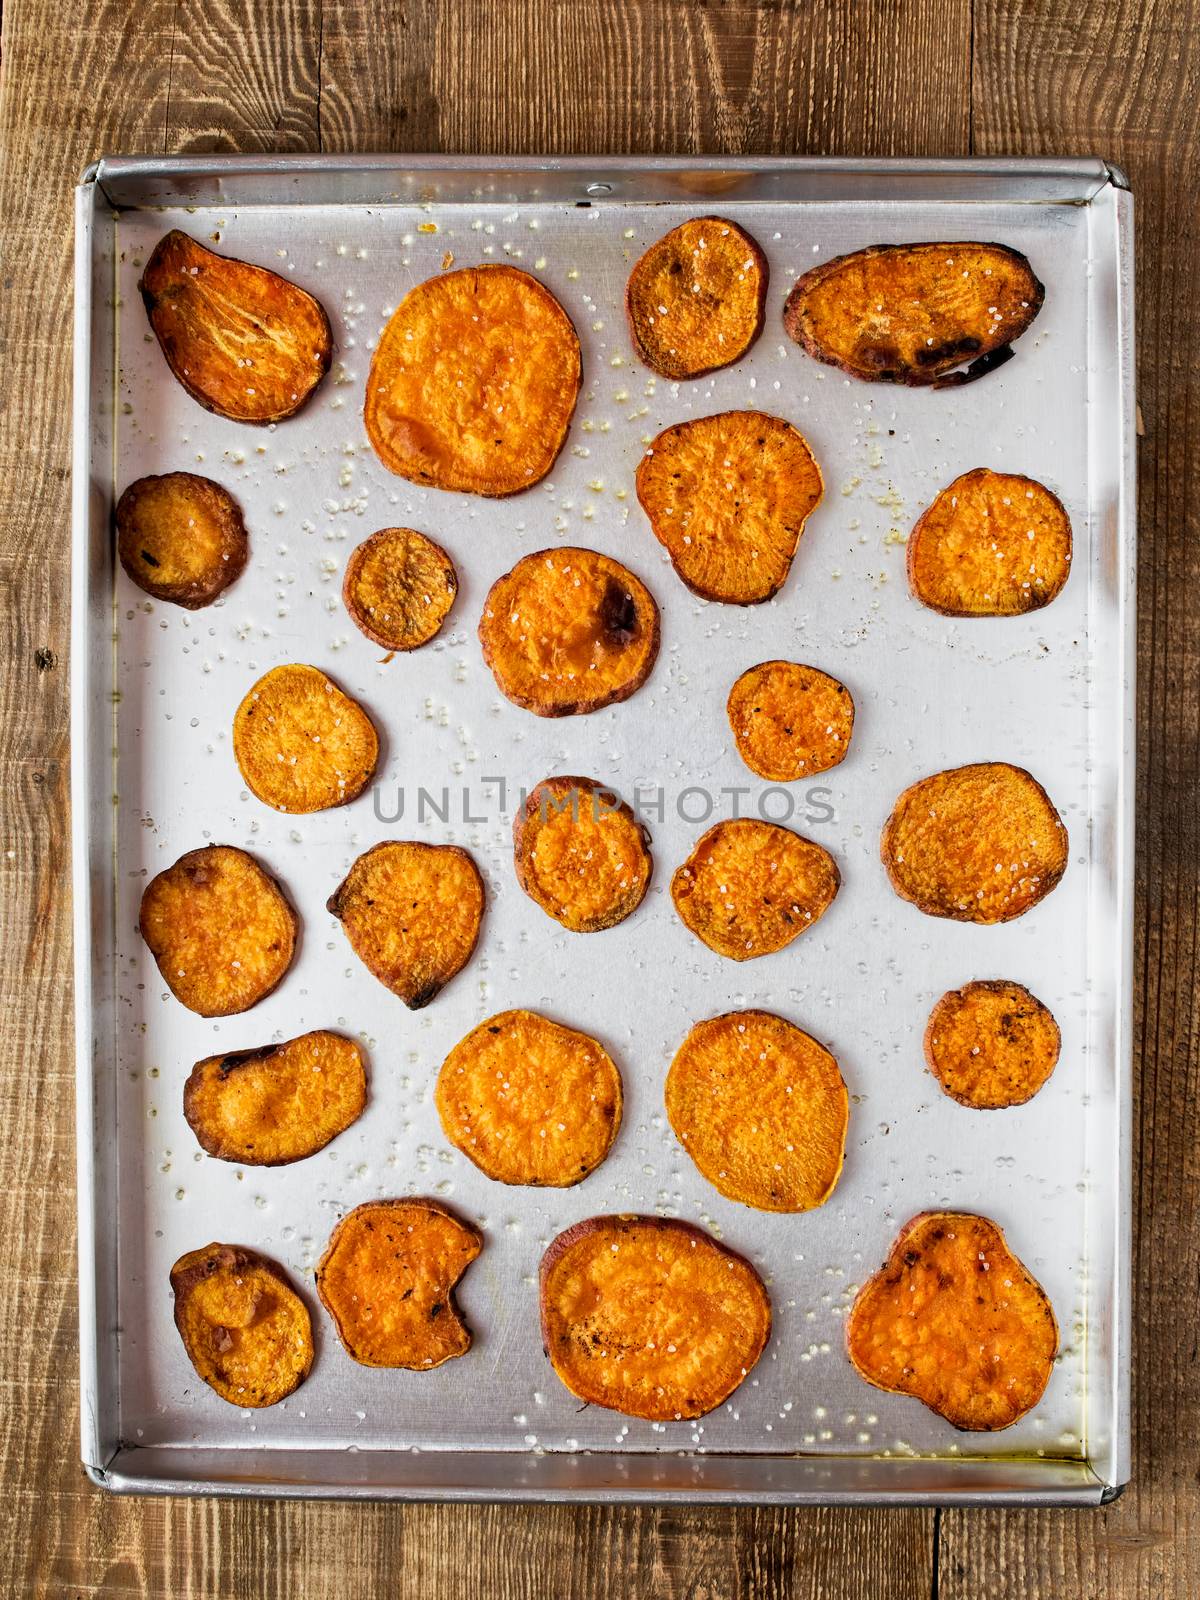 rustic golden sweet potato chips by zkruger